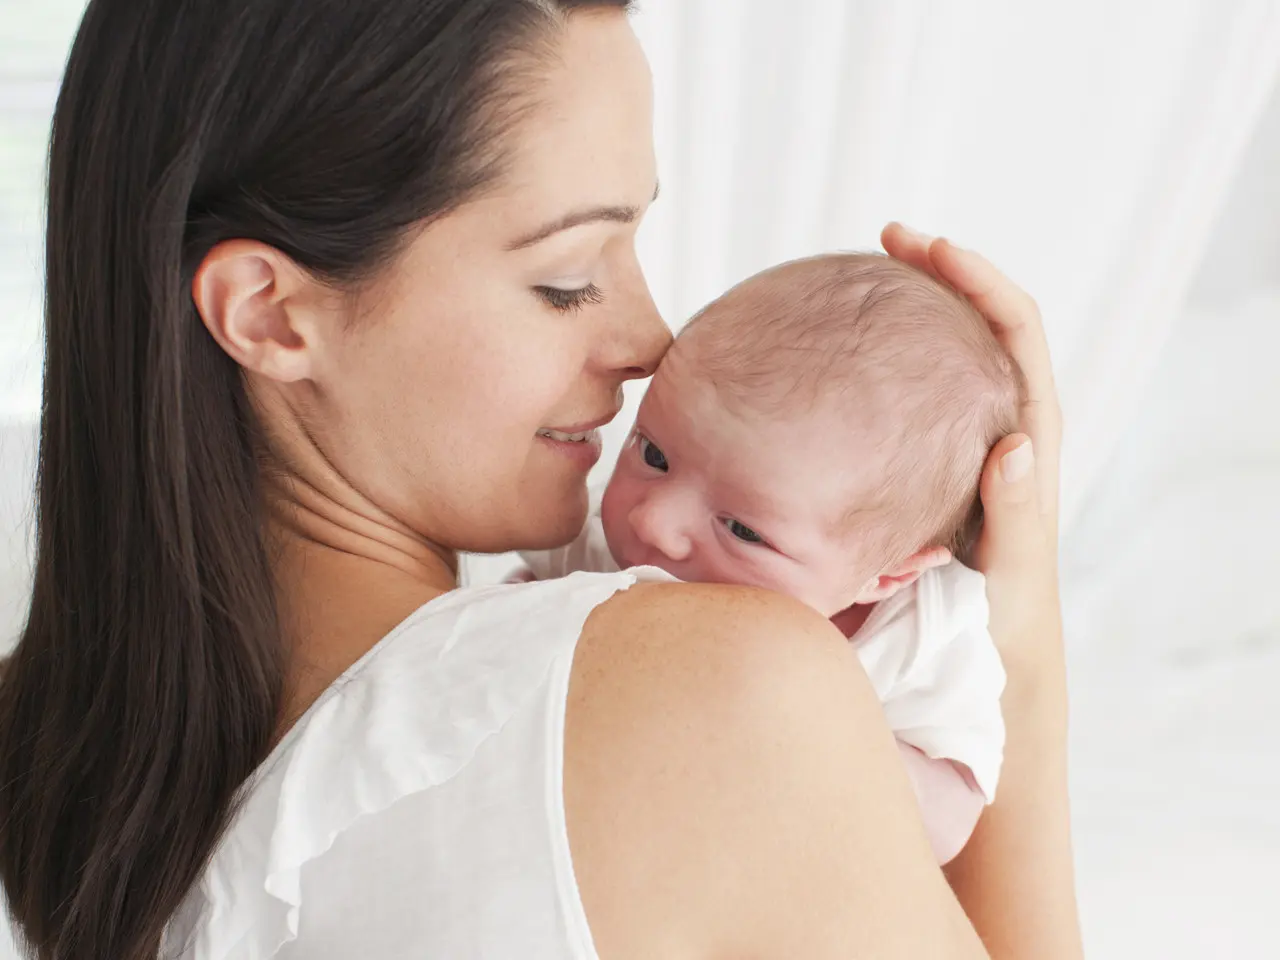 Manfaat menggendong bayi. (media2.s-nbcnews.com)